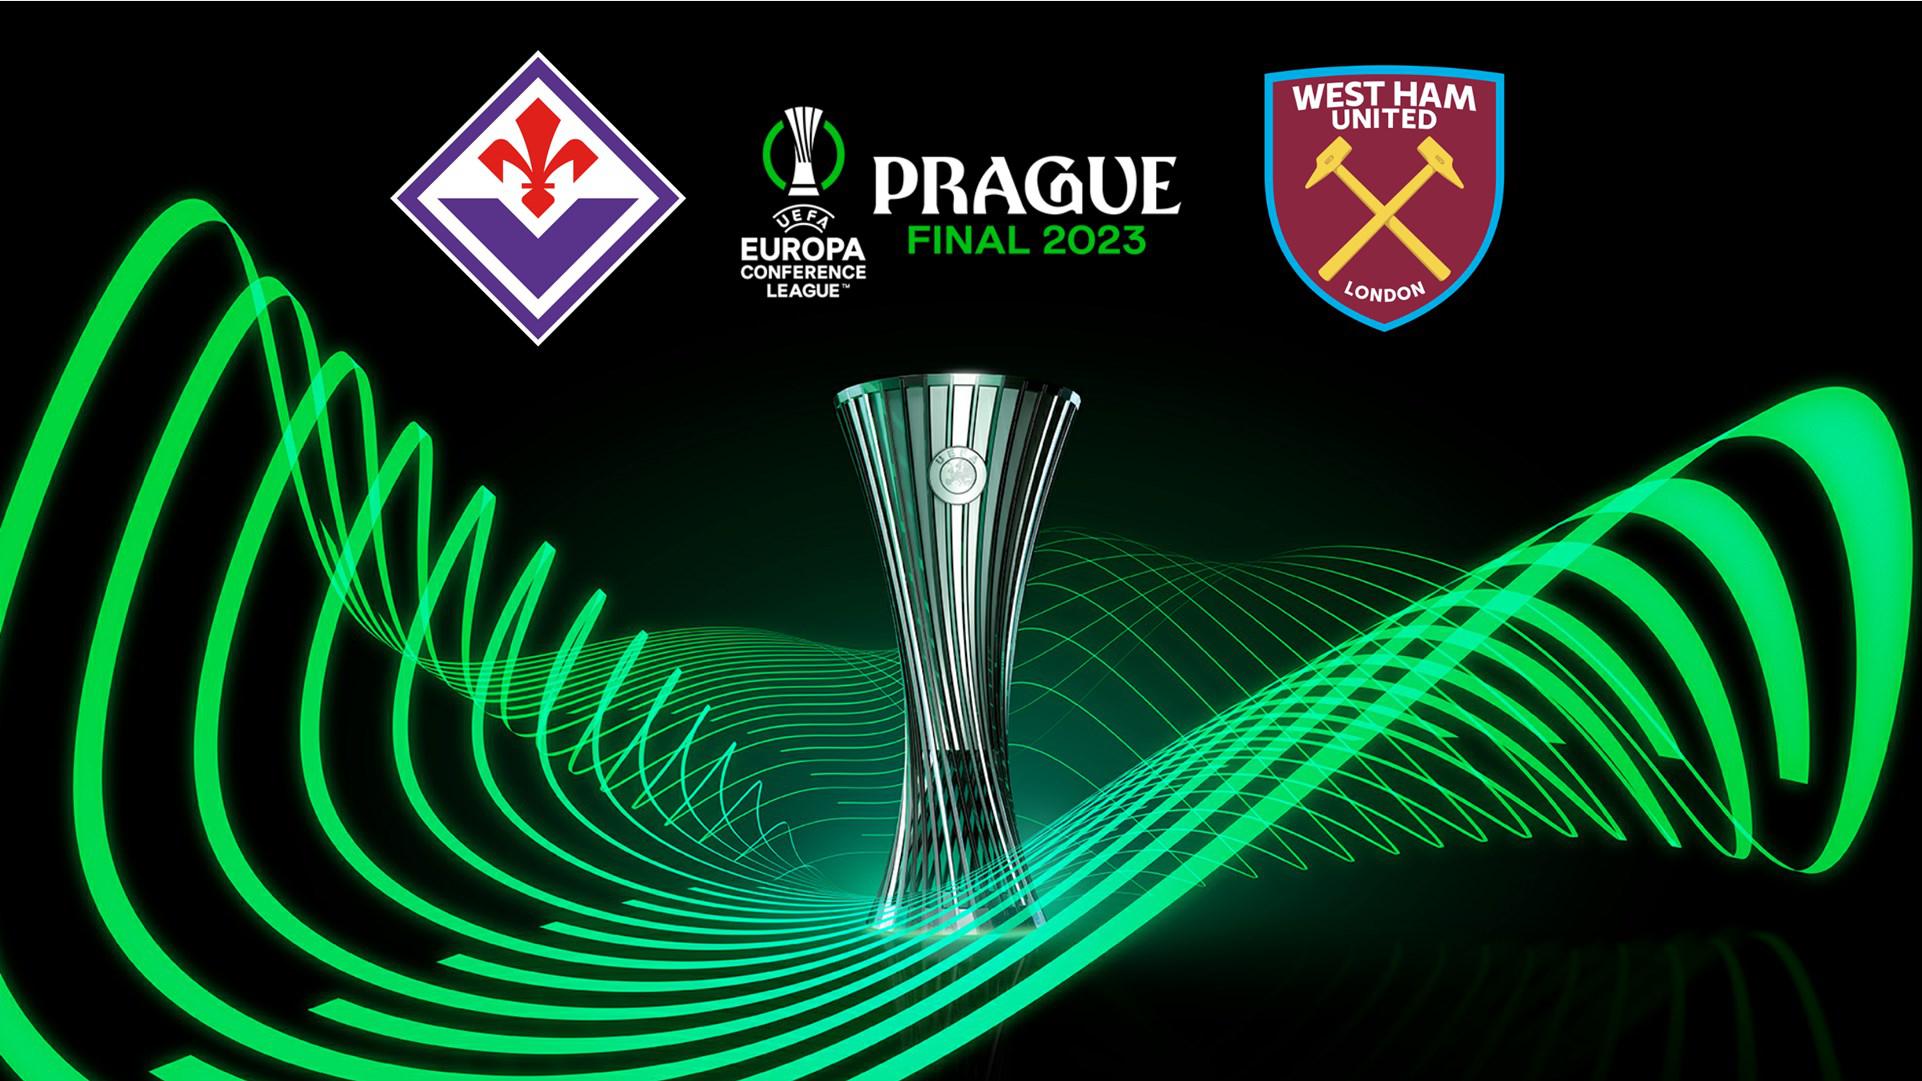 Fiorentina vs West Ham in Europa Conference League final: Meet the teams |  UEFA Europa Conference League | UEFA.com